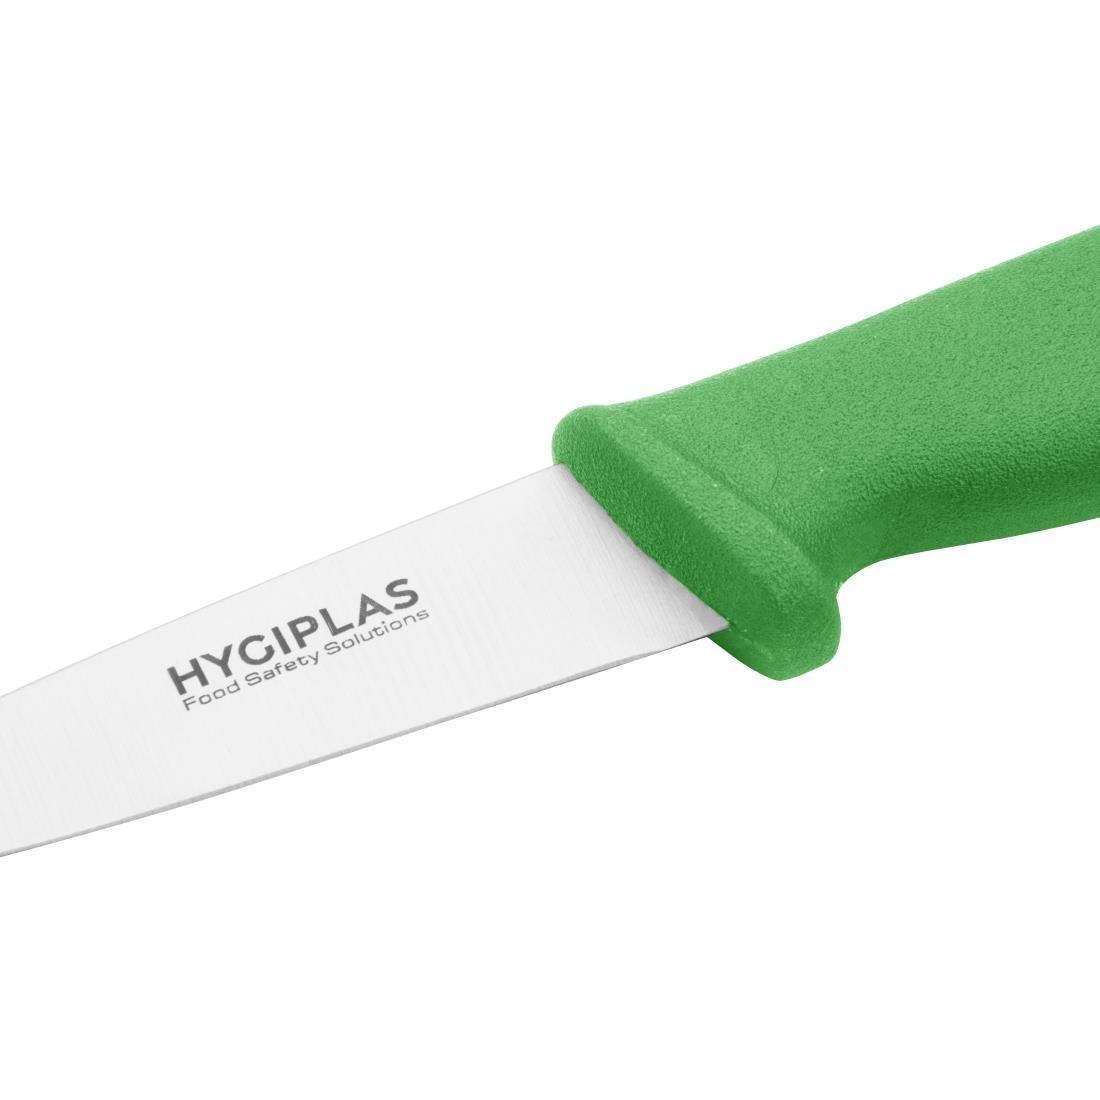 Hygiplas Paring Knife Green 9cm - C866  - 3